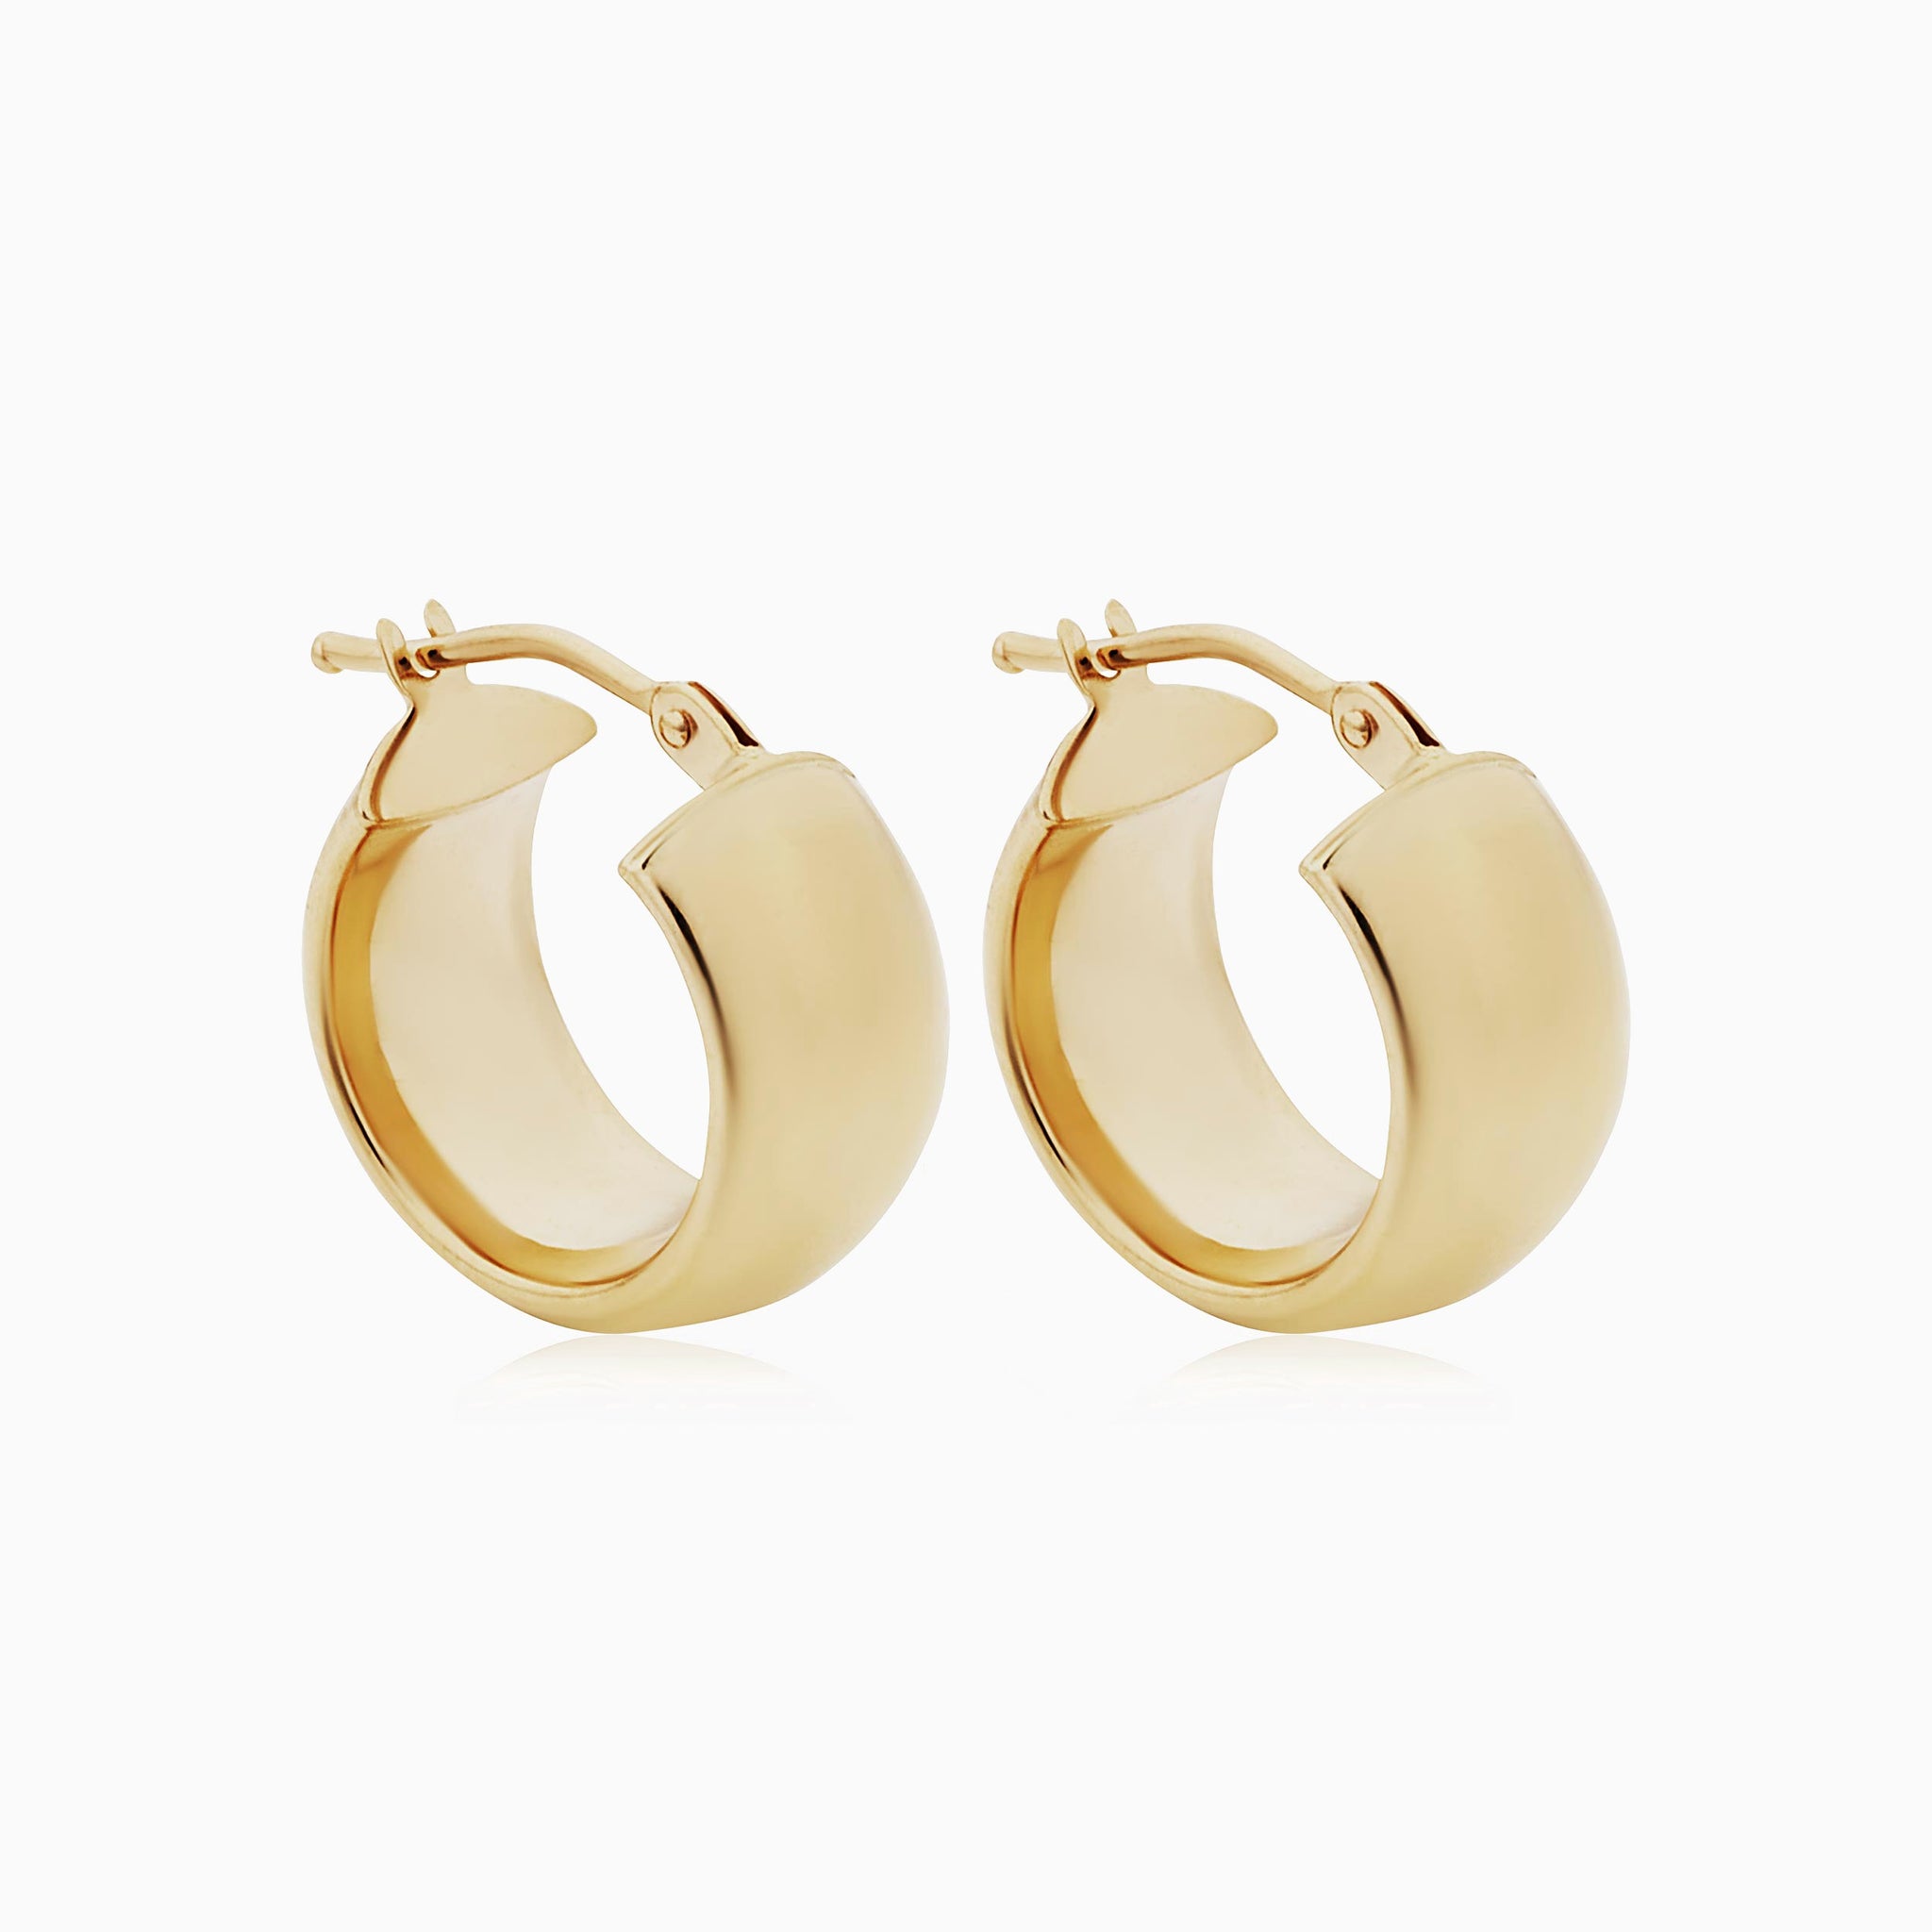 Luxury Big Gold Hoop Earrings For Lady Women 4cm Orrous Girls Ear Studs Set  Designer Jewelry Earring Valentines Day Gift Eng274x From Ibezo, $28.8